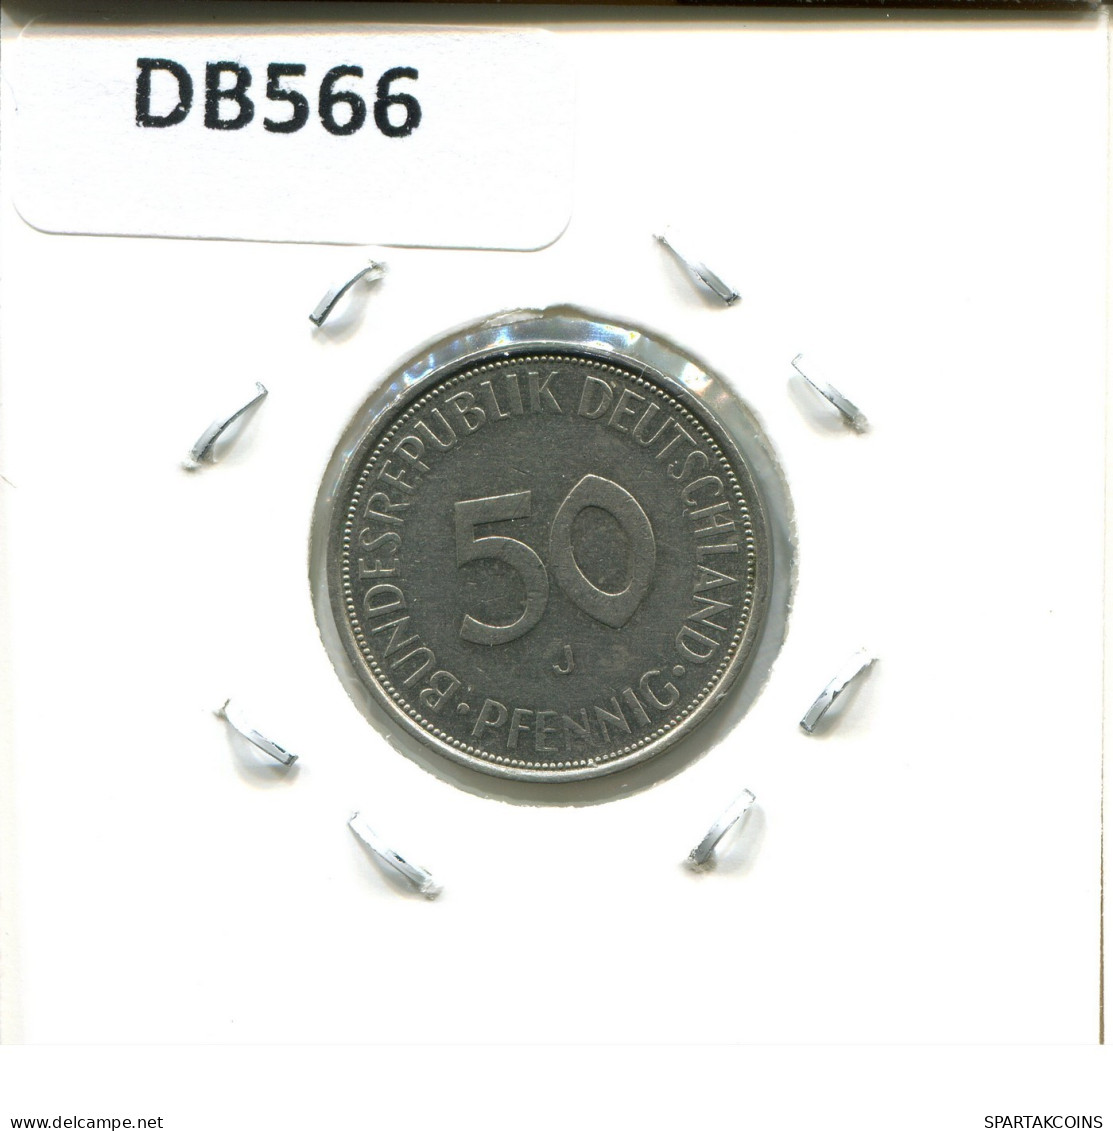 50 PFENNIG 1972 J BRD DEUTSCHLAND Münze GERMANY #DB566.D.A - 50 Pfennig